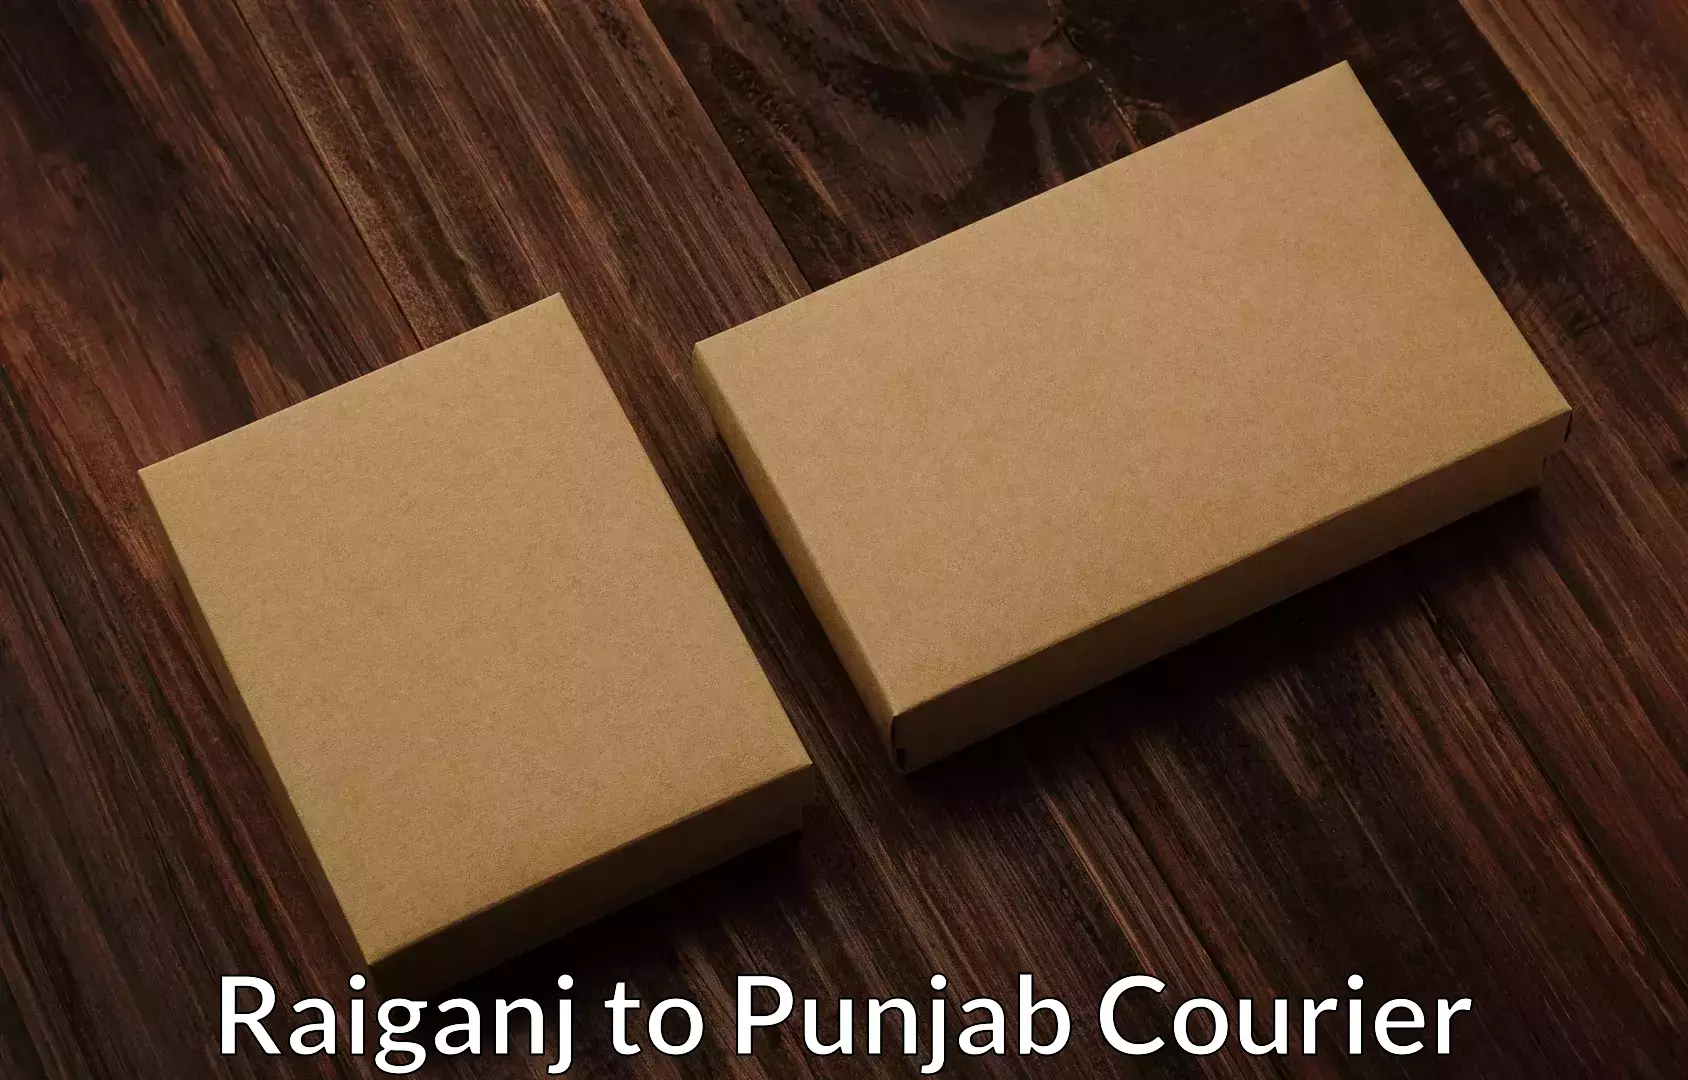 Professional moving company Raiganj to Dinanagar